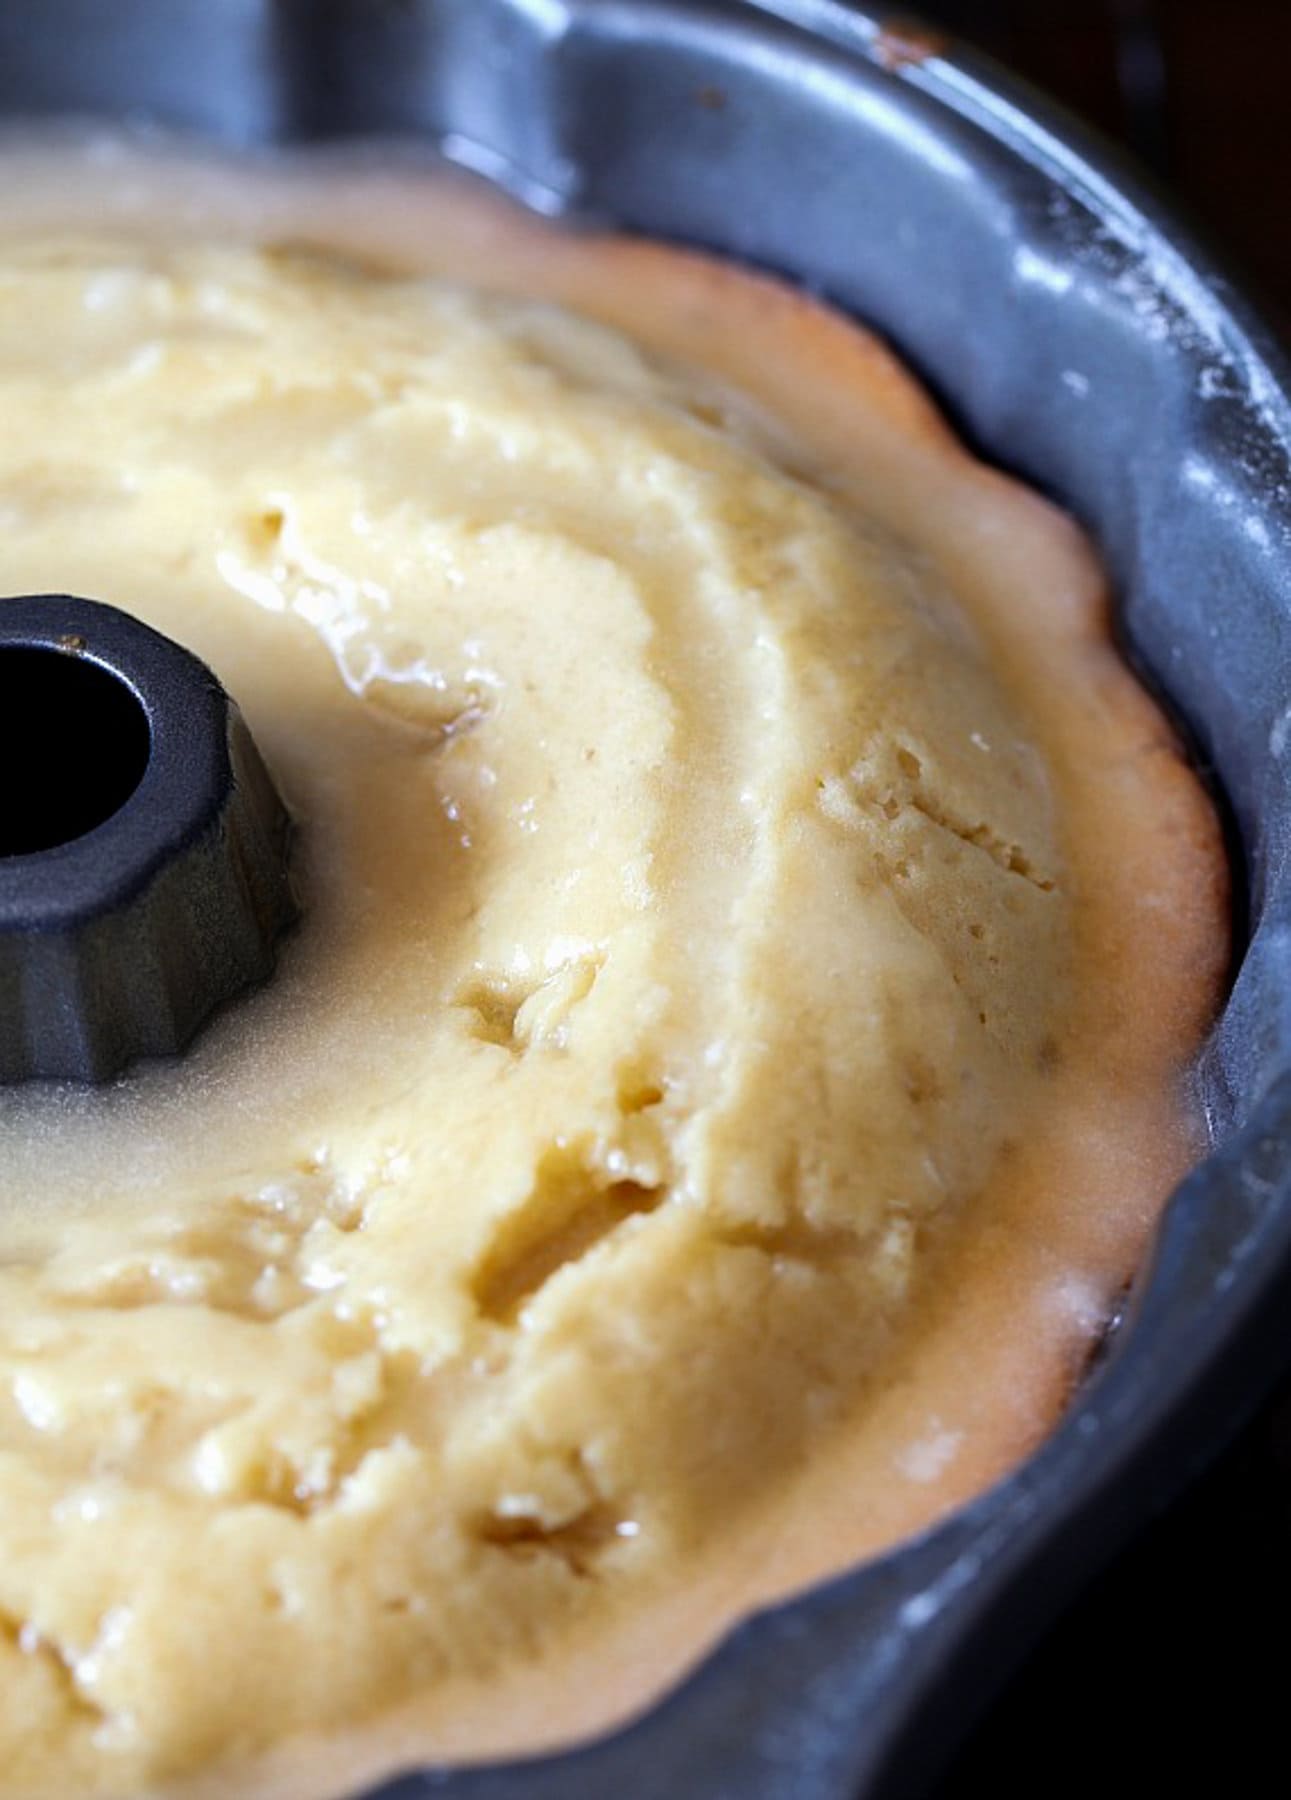 Kentucky Butter Cake in a bundt pan cooling